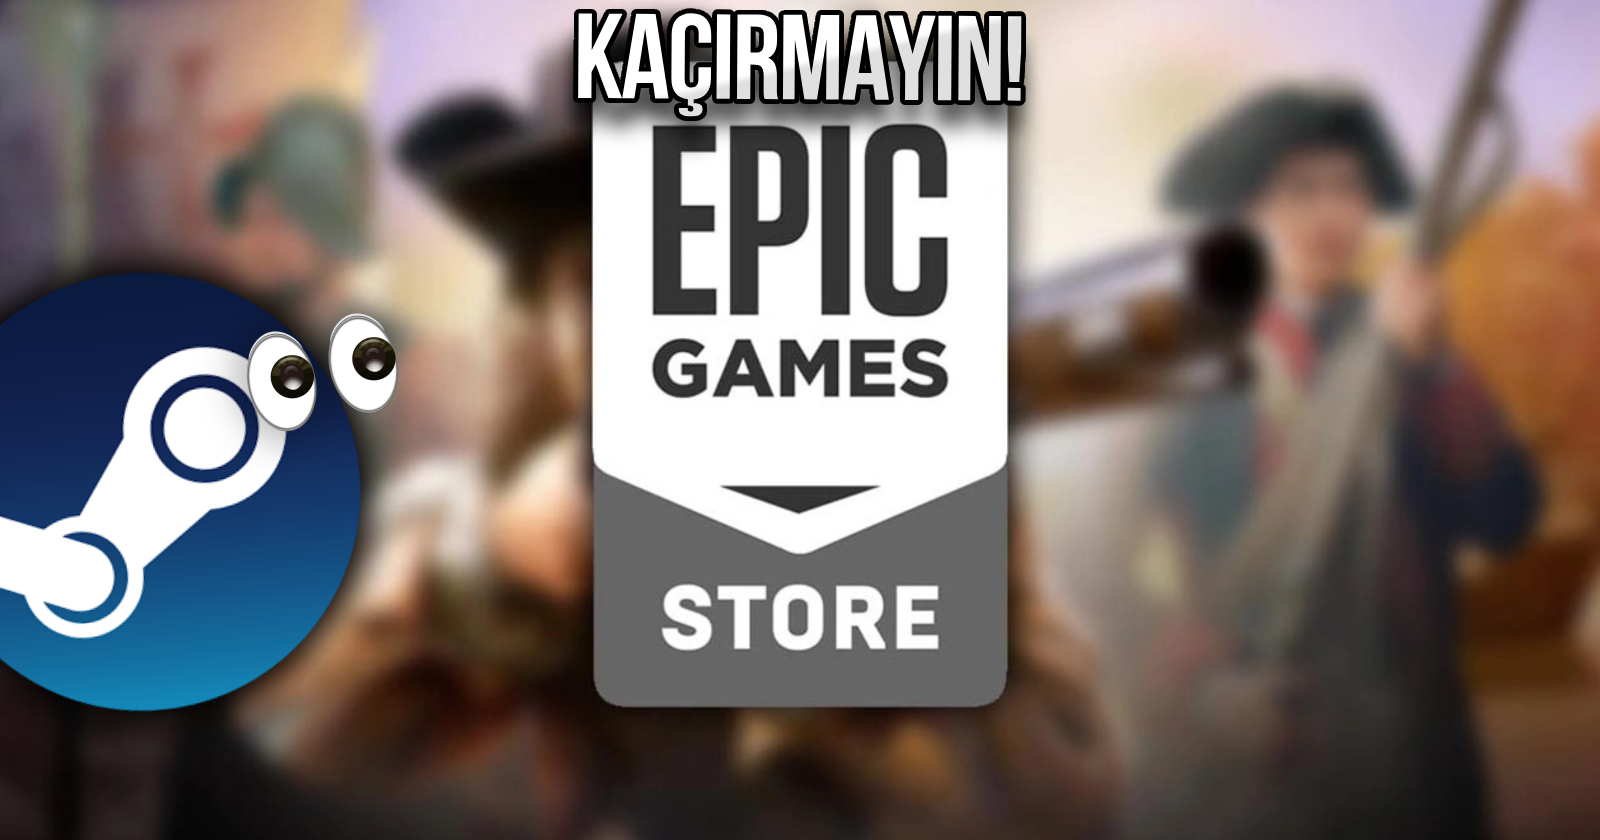 epic-games-ucretsiz-oyun-24-aralik-kapak.jpg